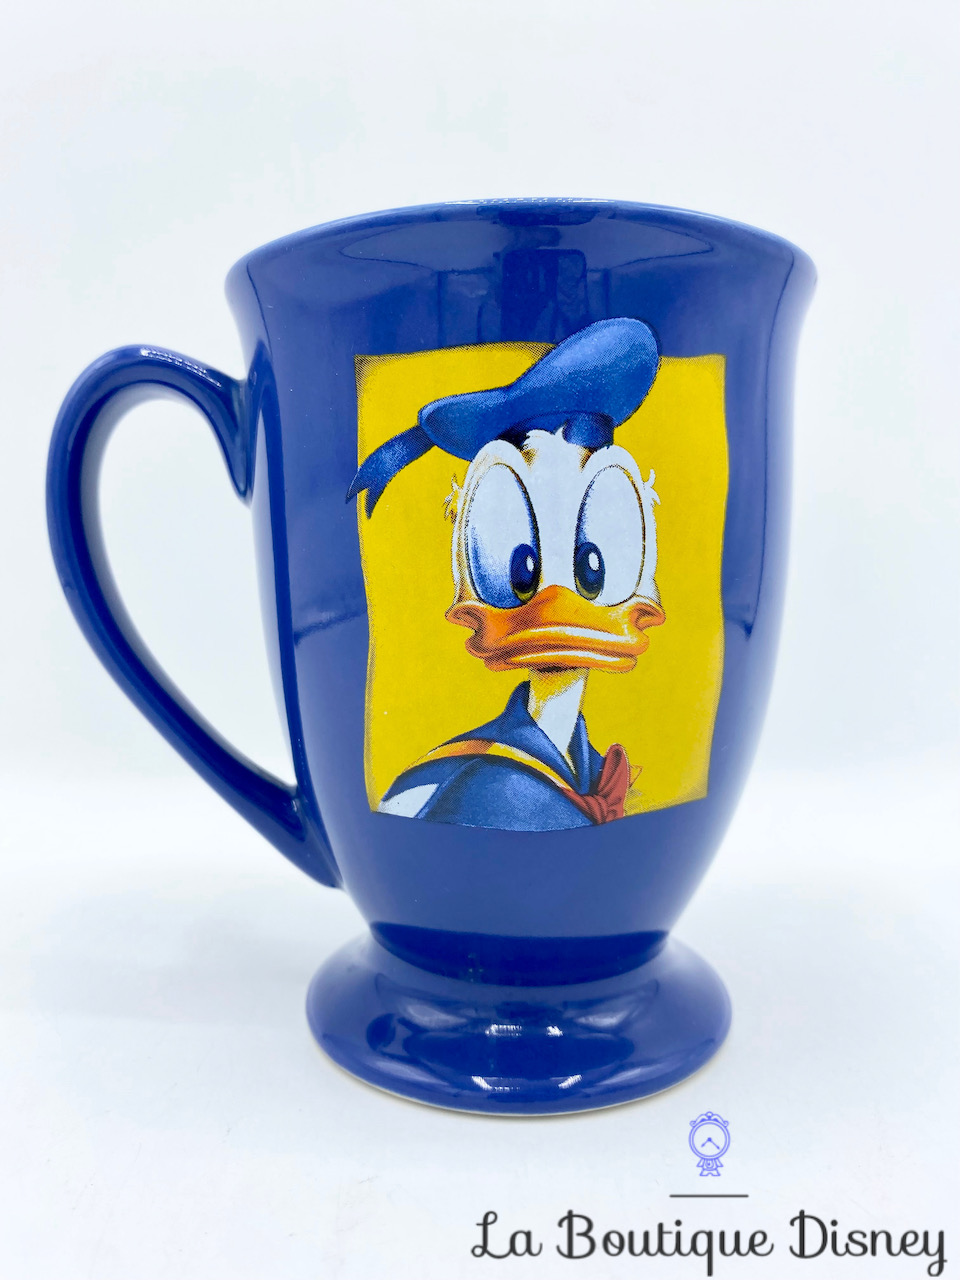 Disney - Mug Donald Duck Donald dans la voiture - Mugs - LDLC